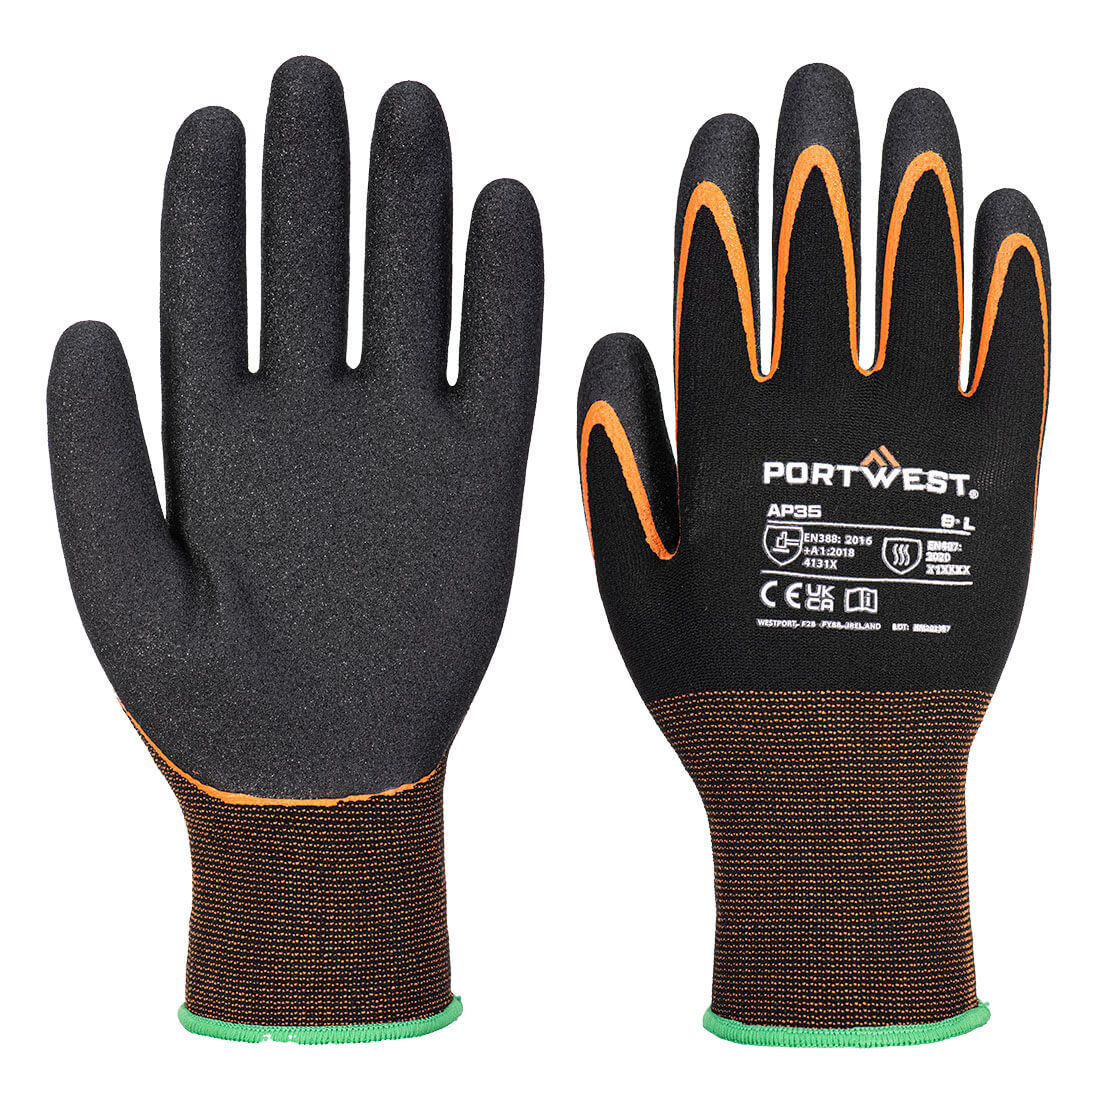 Grip 15 Nitrile Double Palm Glove  (AP35)